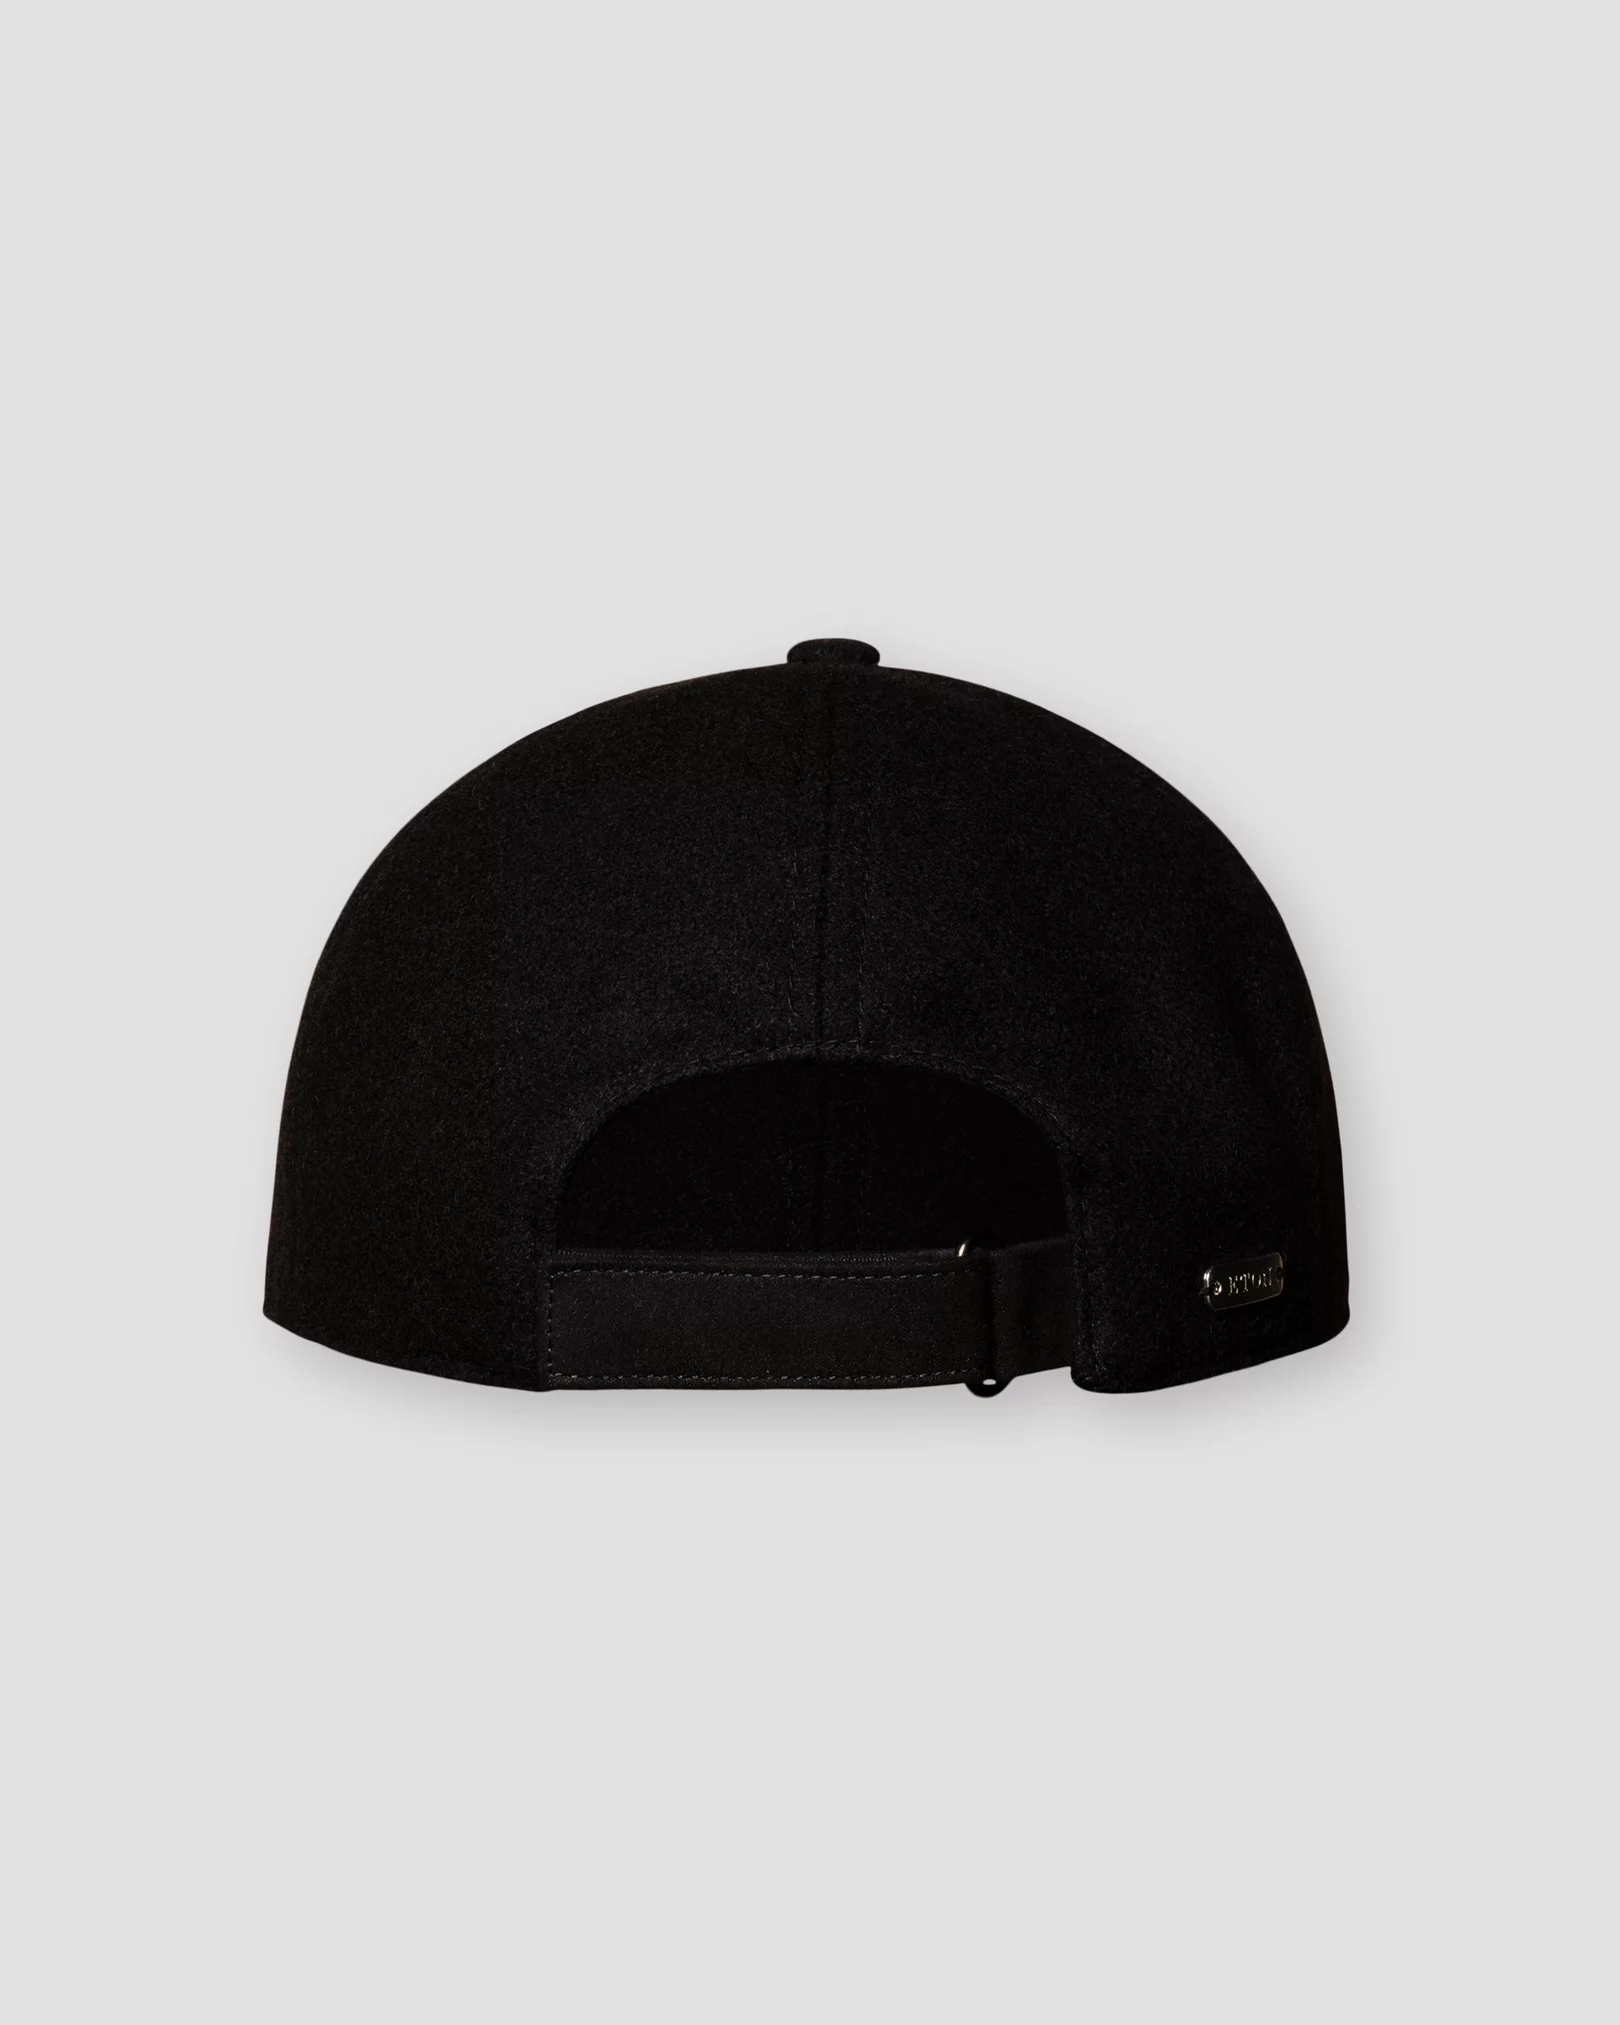 Eton - black cap